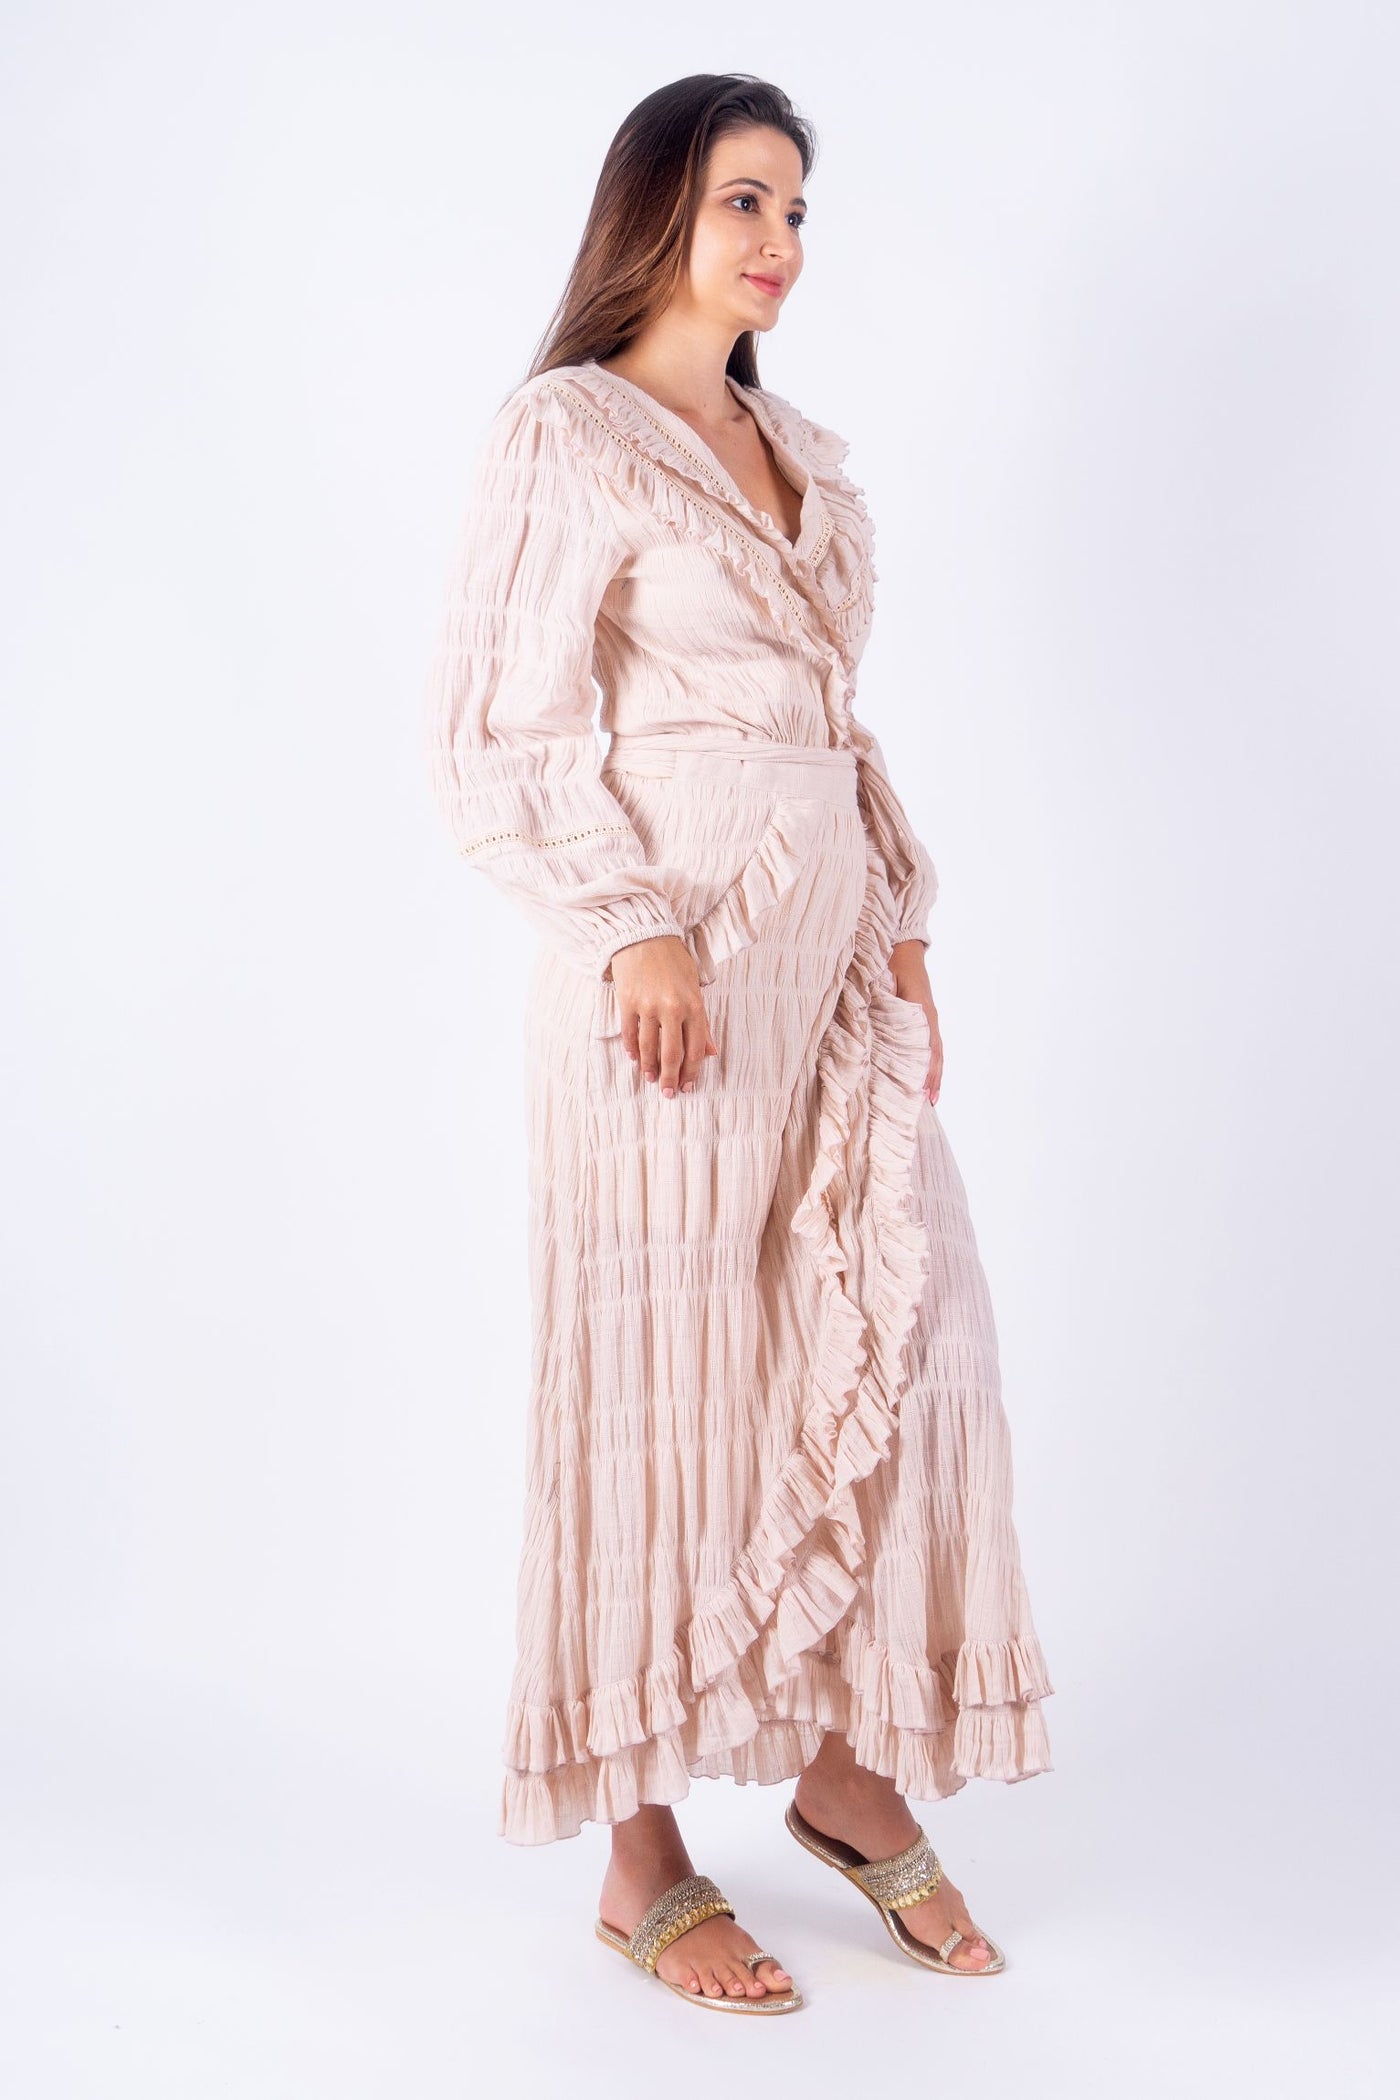 Madame Dress (Long) by KonaCoco